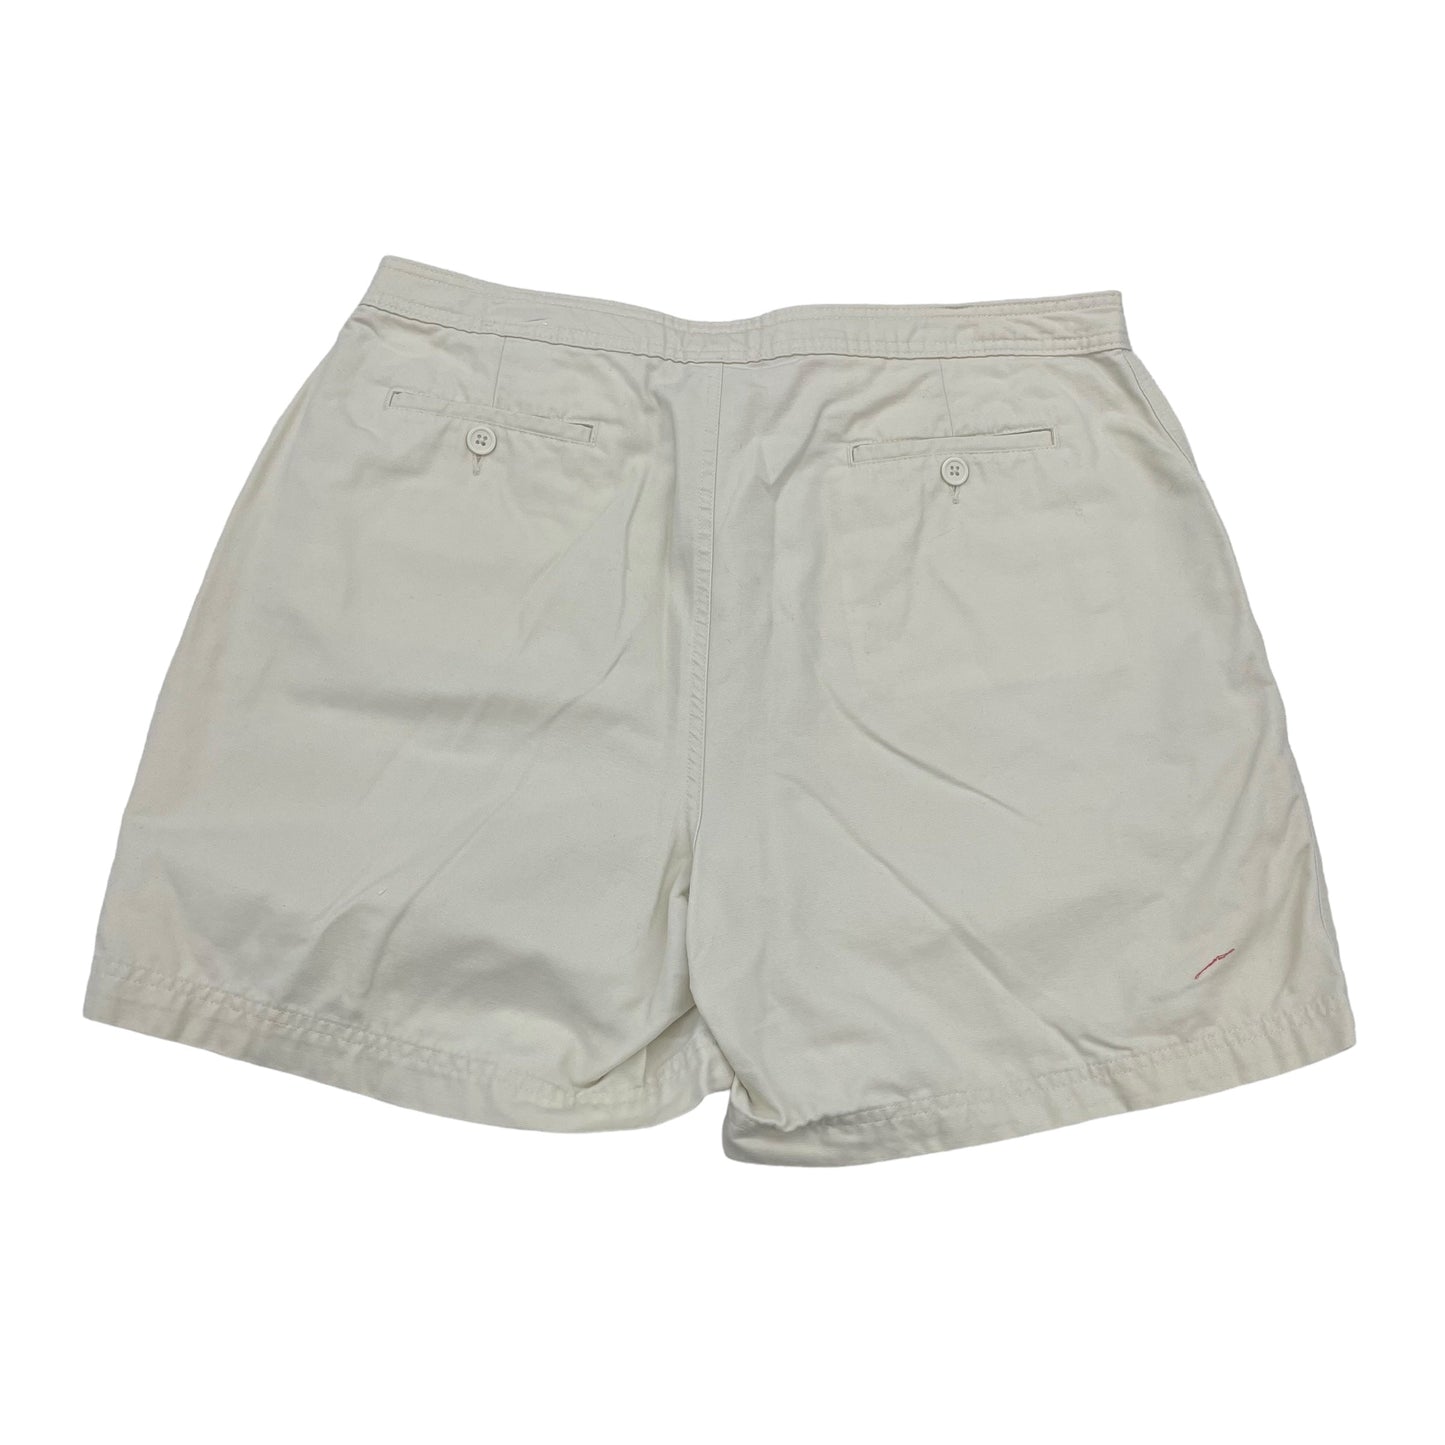 Tan Shorts St Johns Bay, Size 16w